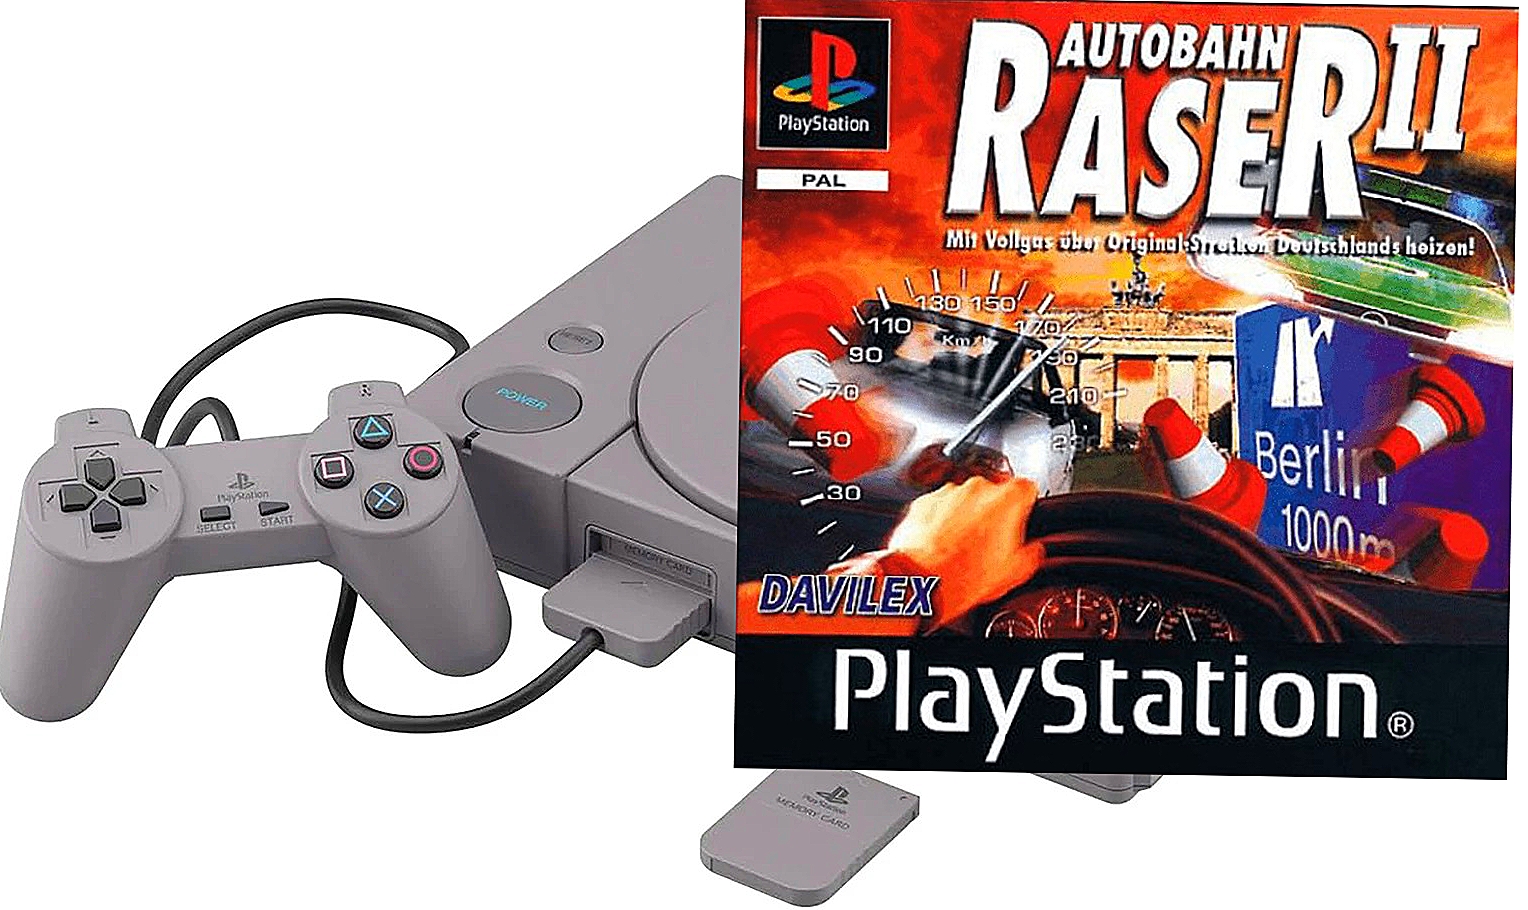 Autobahn Racer II. Sony PlayStation. Проф обзор и реакция.